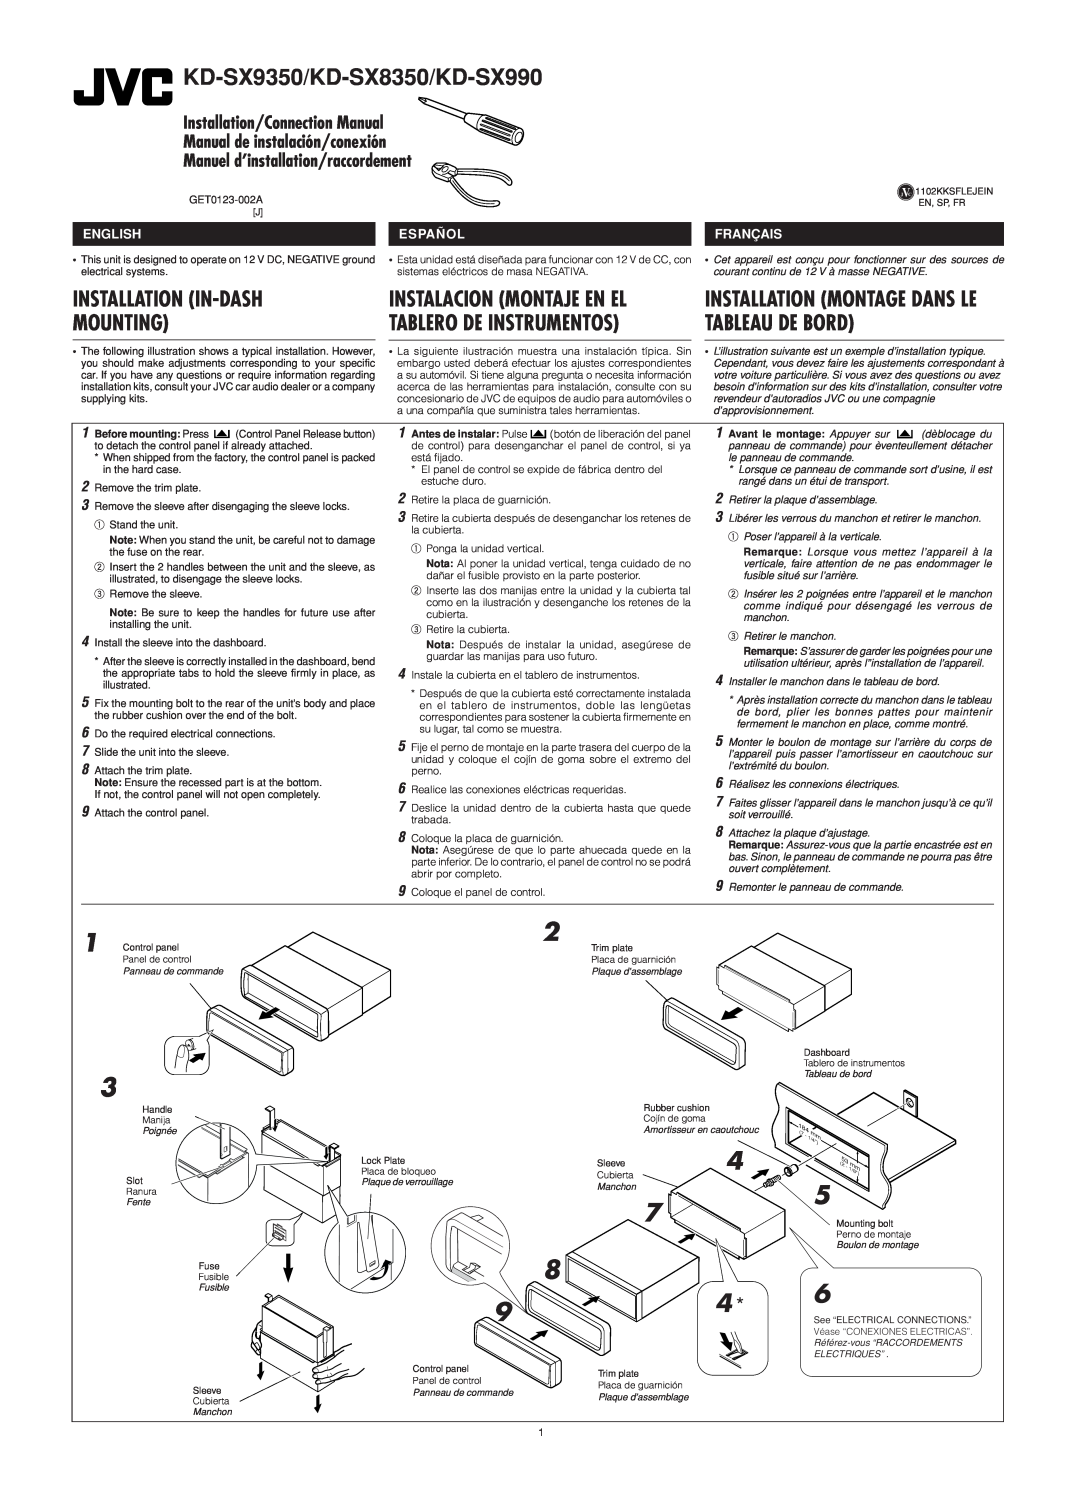 JVC manual Installation In-Dash, Mounting, Tableau De Bord, KD-SX9350/KD-SX8350/KD-SX990, Tablero De Instrumentos 